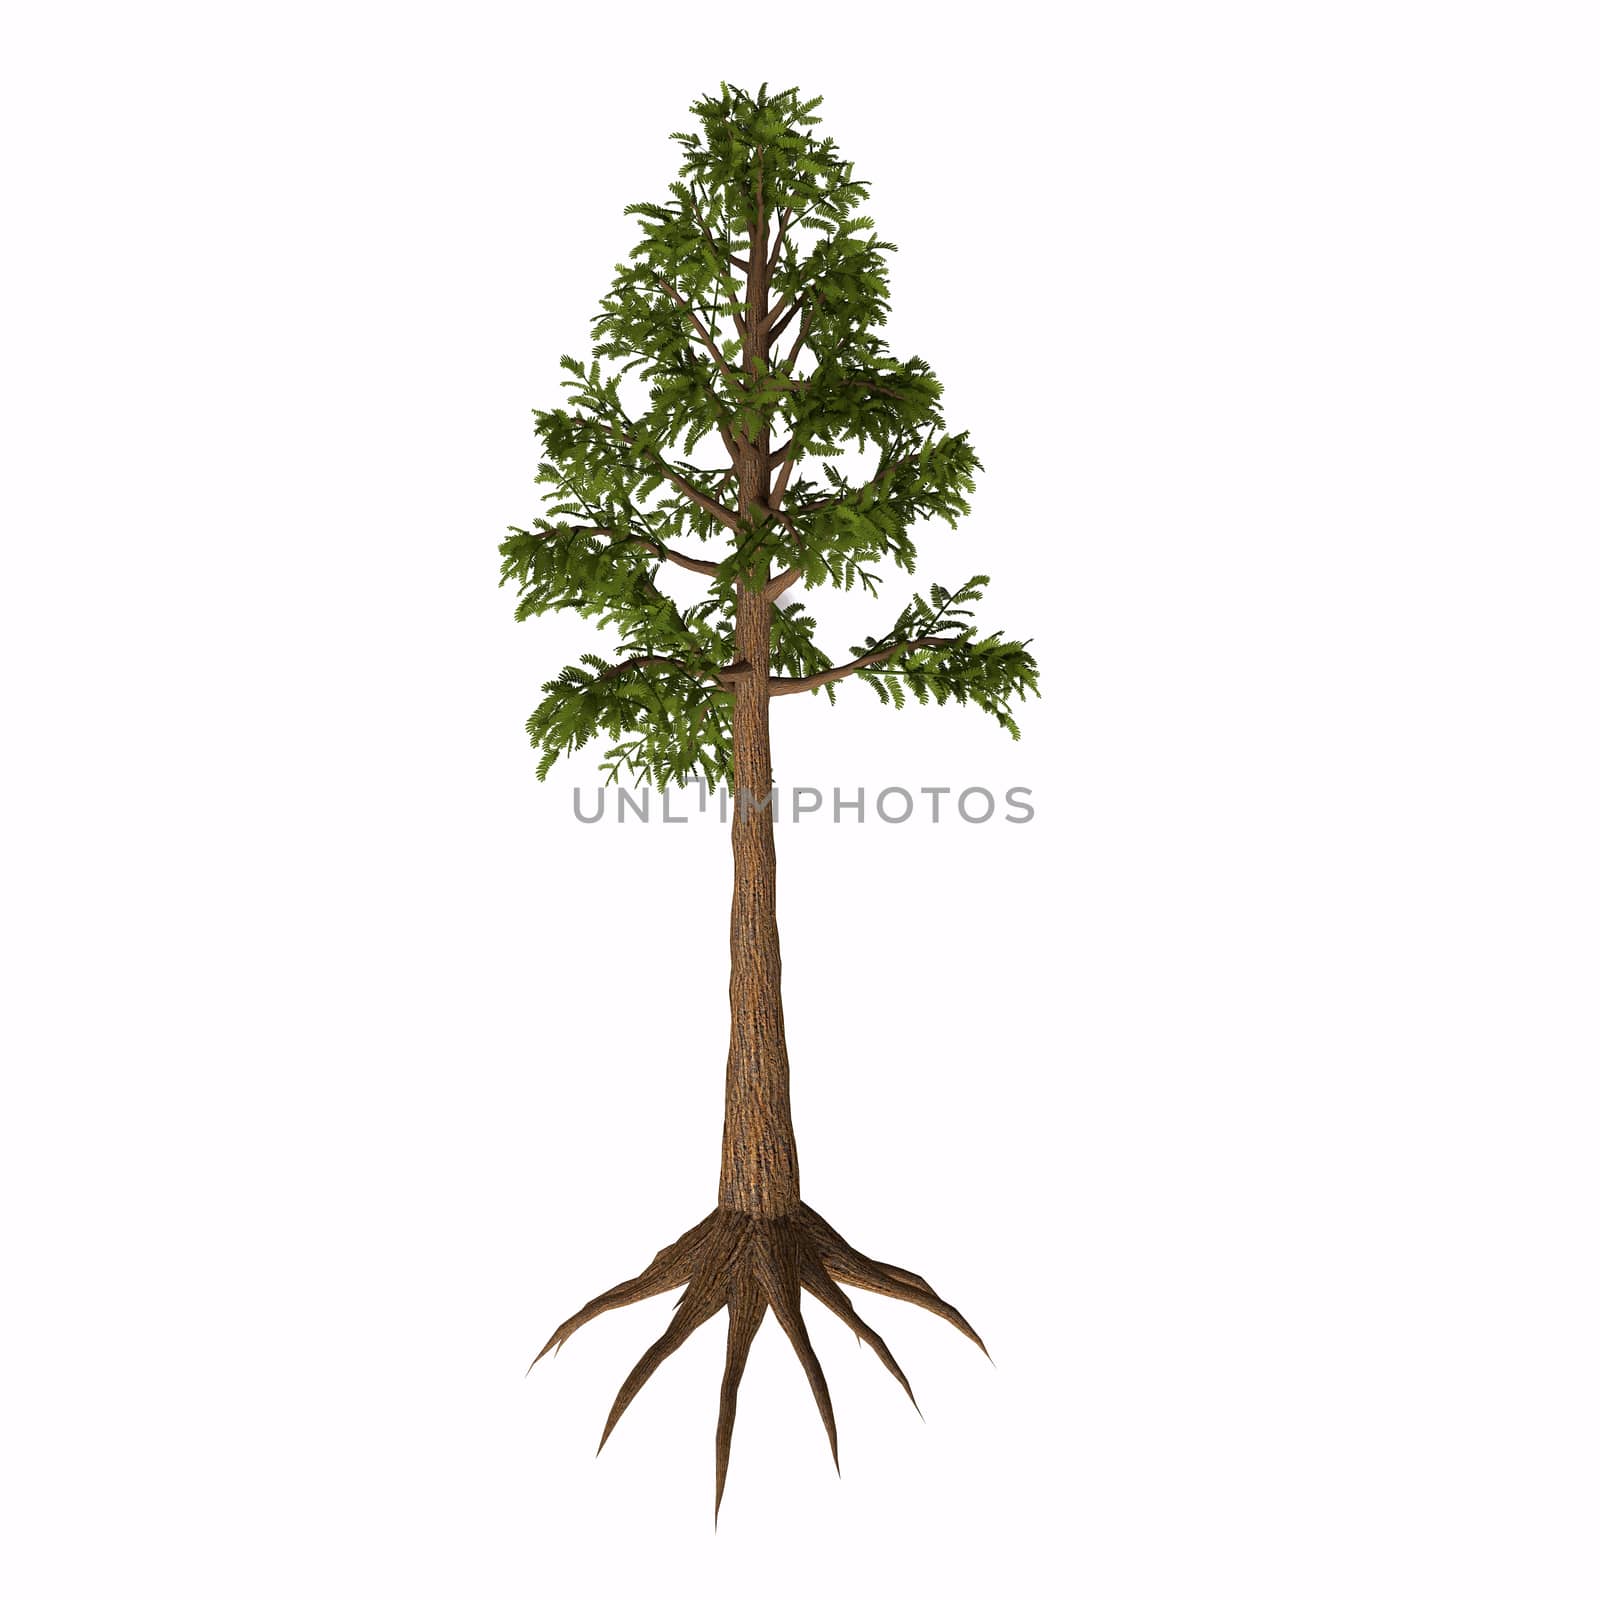 Archaeopteris sp Tree by Catmando